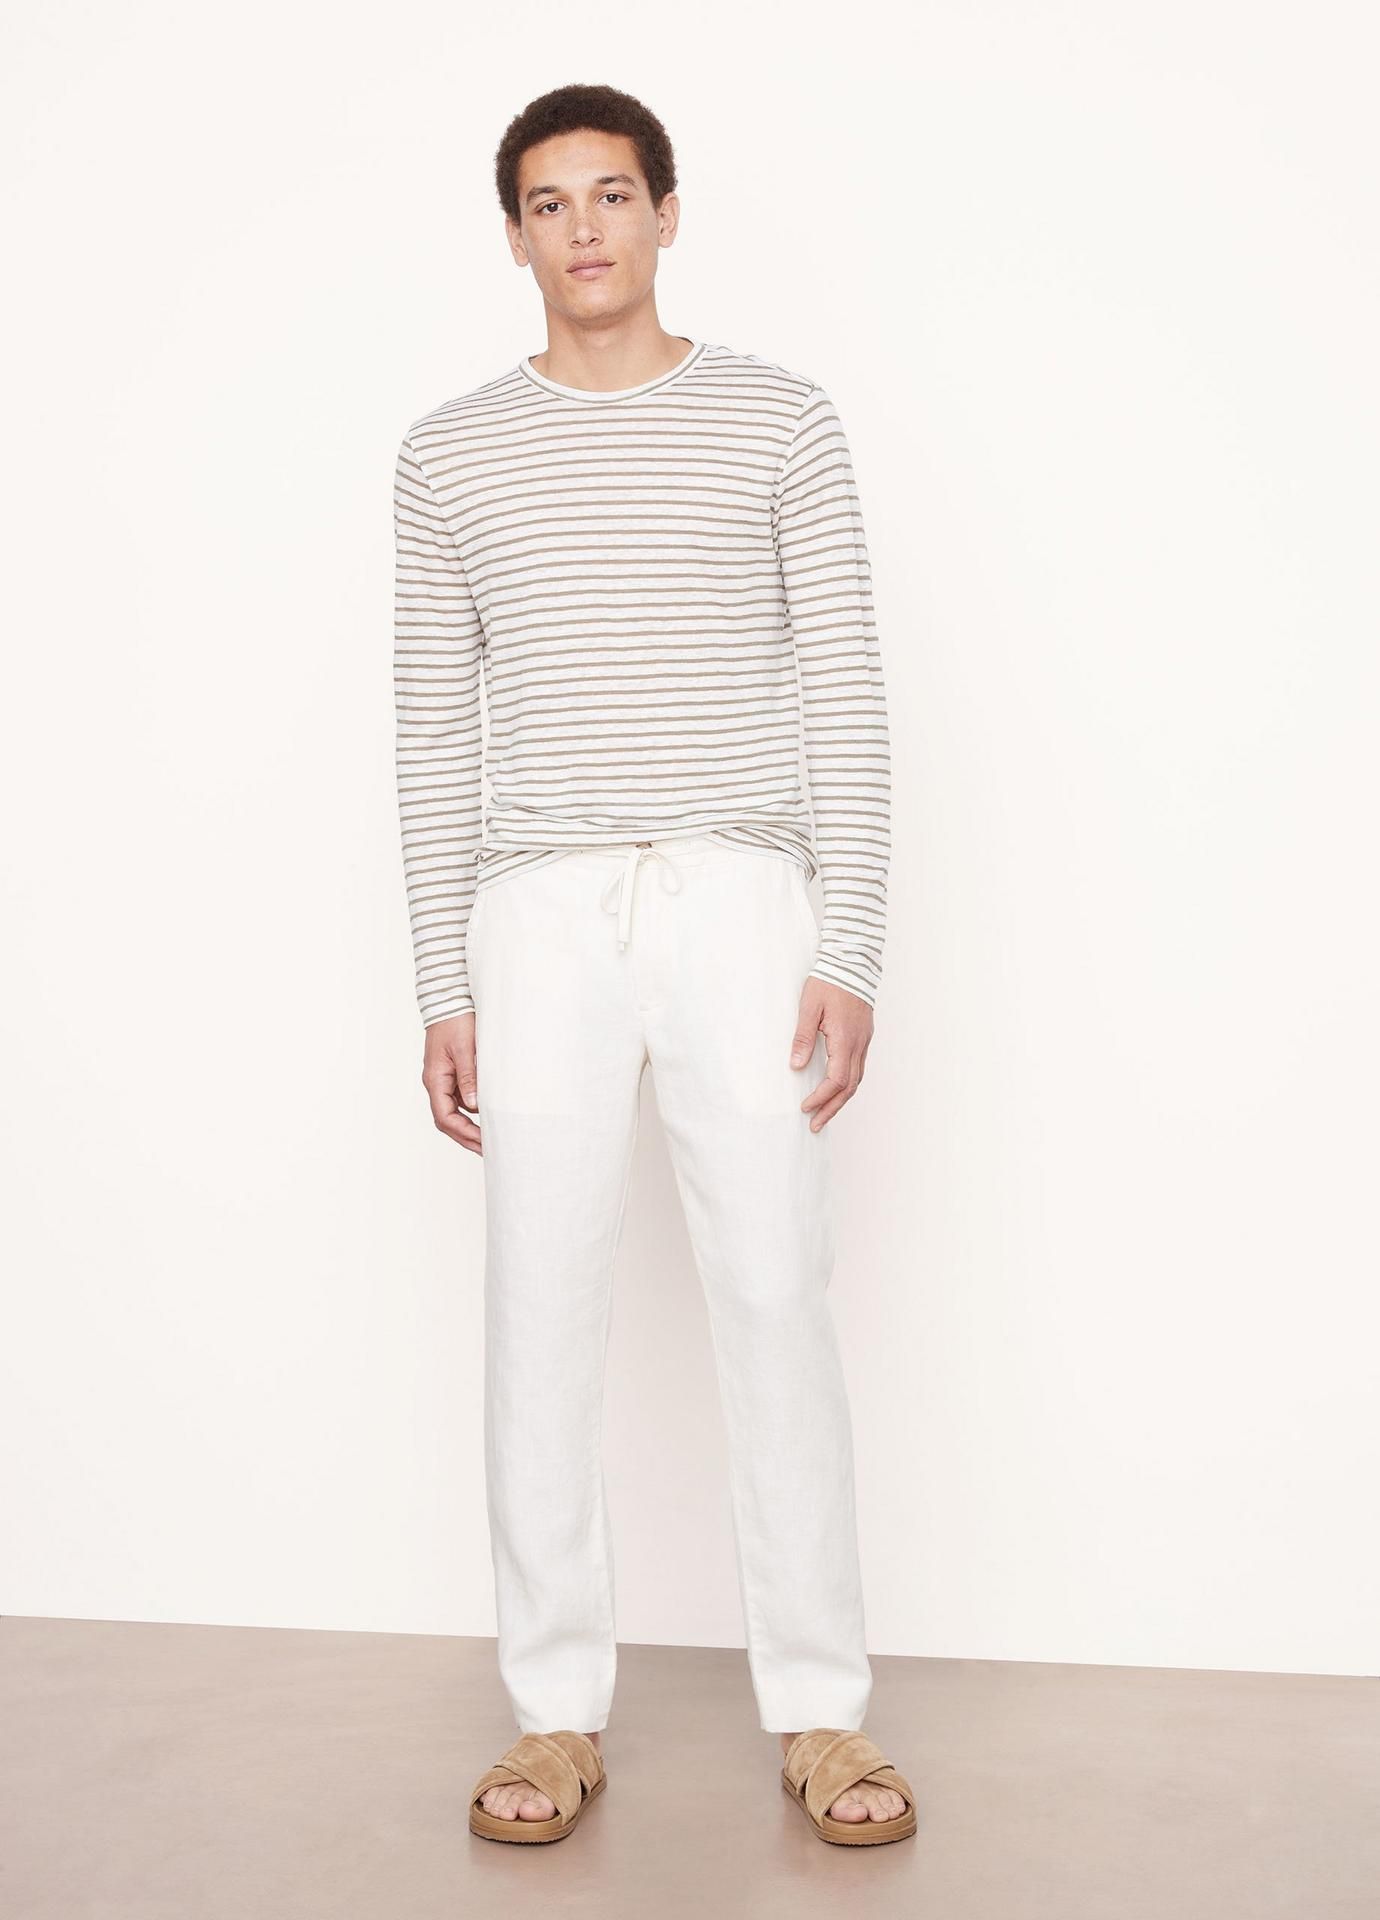 The Best Linen Pants For Men in 2023  FashionBeans